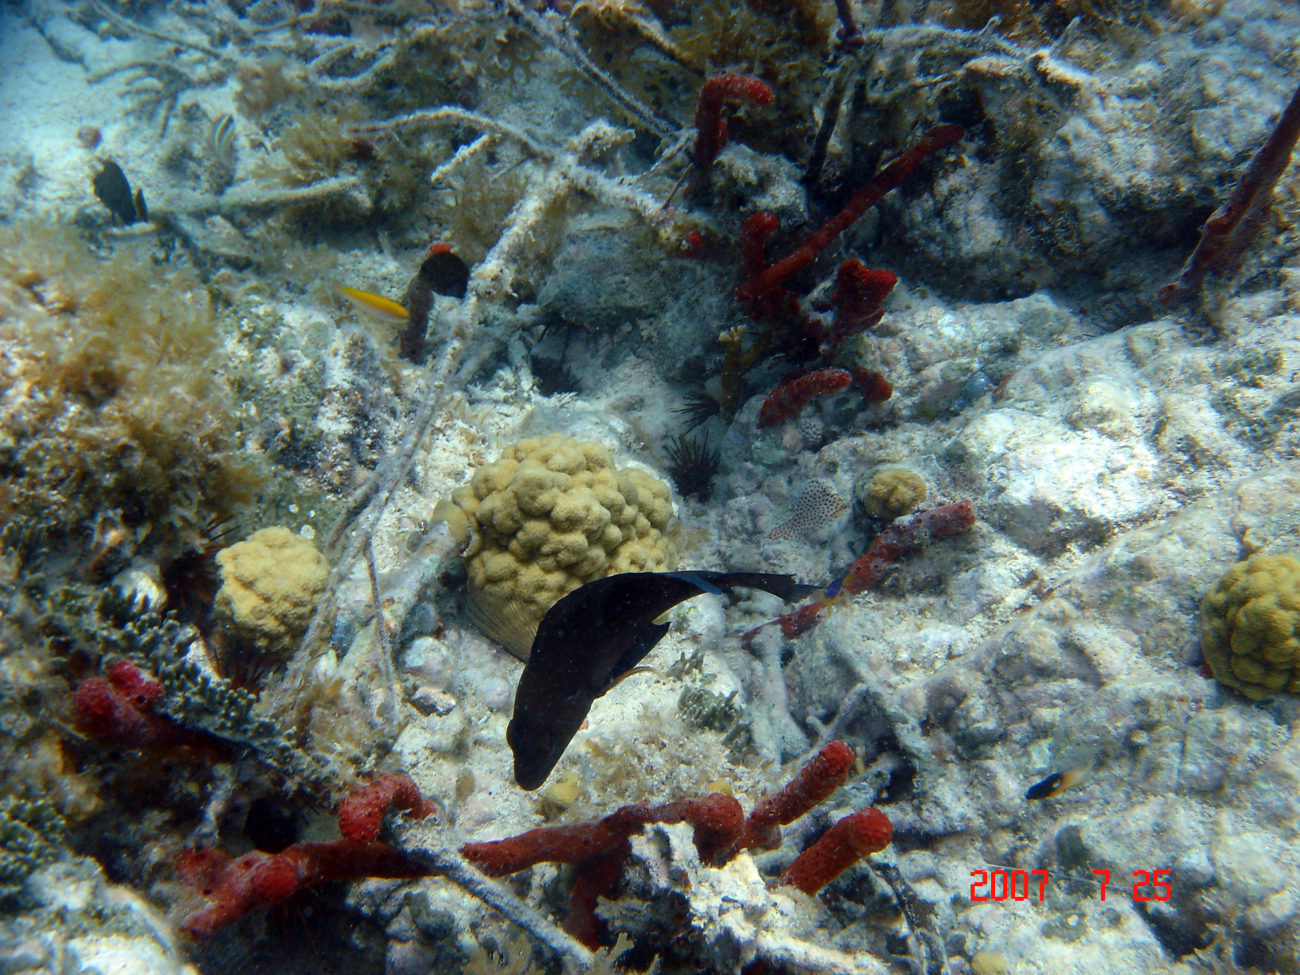 Black hamlet (Hypoplectrus nigricans), mustard hill coral (Porites astroides), a red sponge (Porifera sp